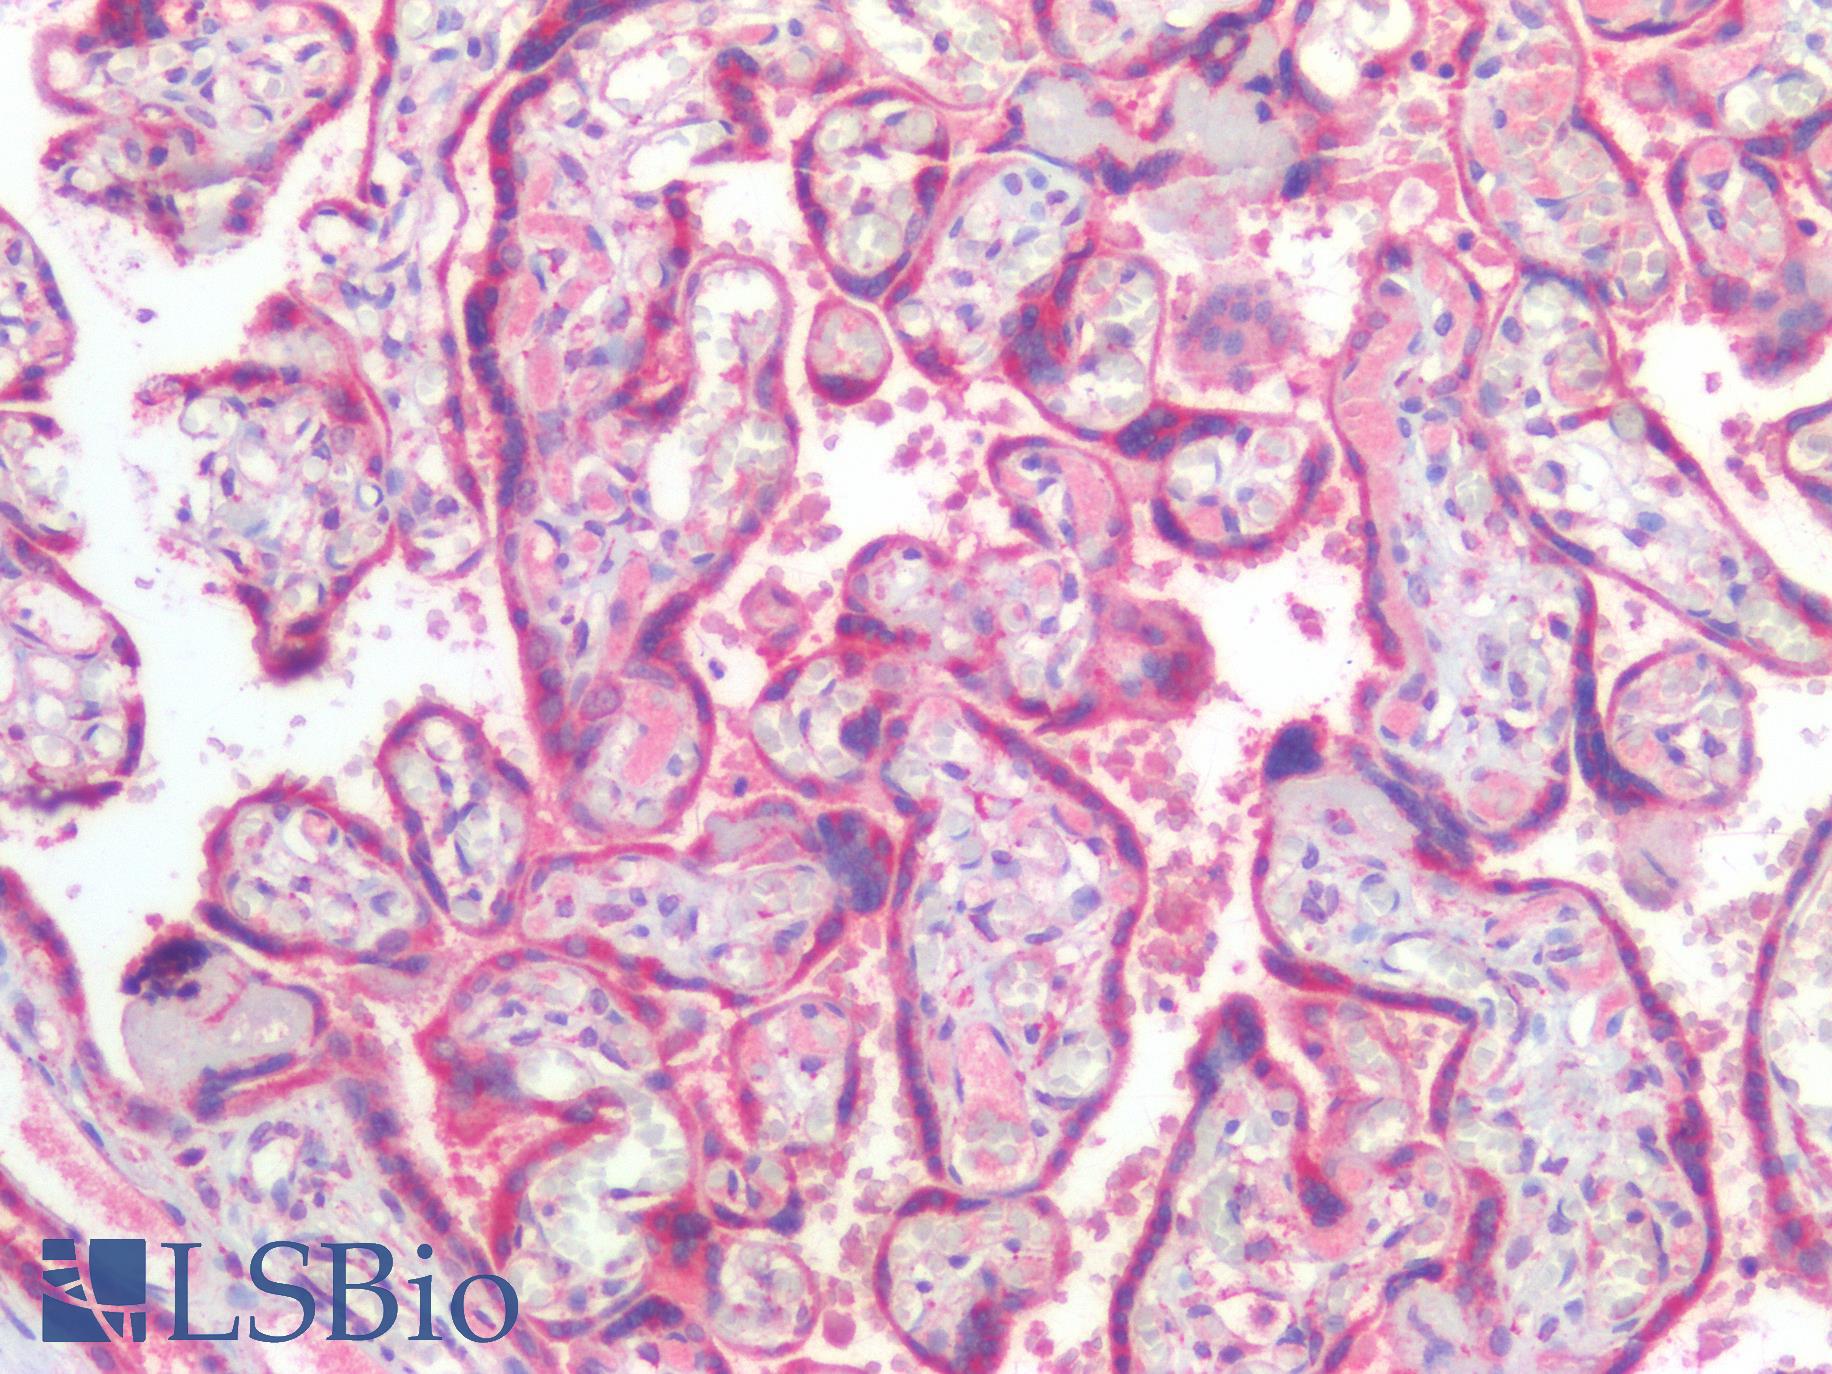 IFIH1 / MDA5 Antibody - Human Placenta: Formalin-Fixed, Paraffin-Embedded (FFPE)